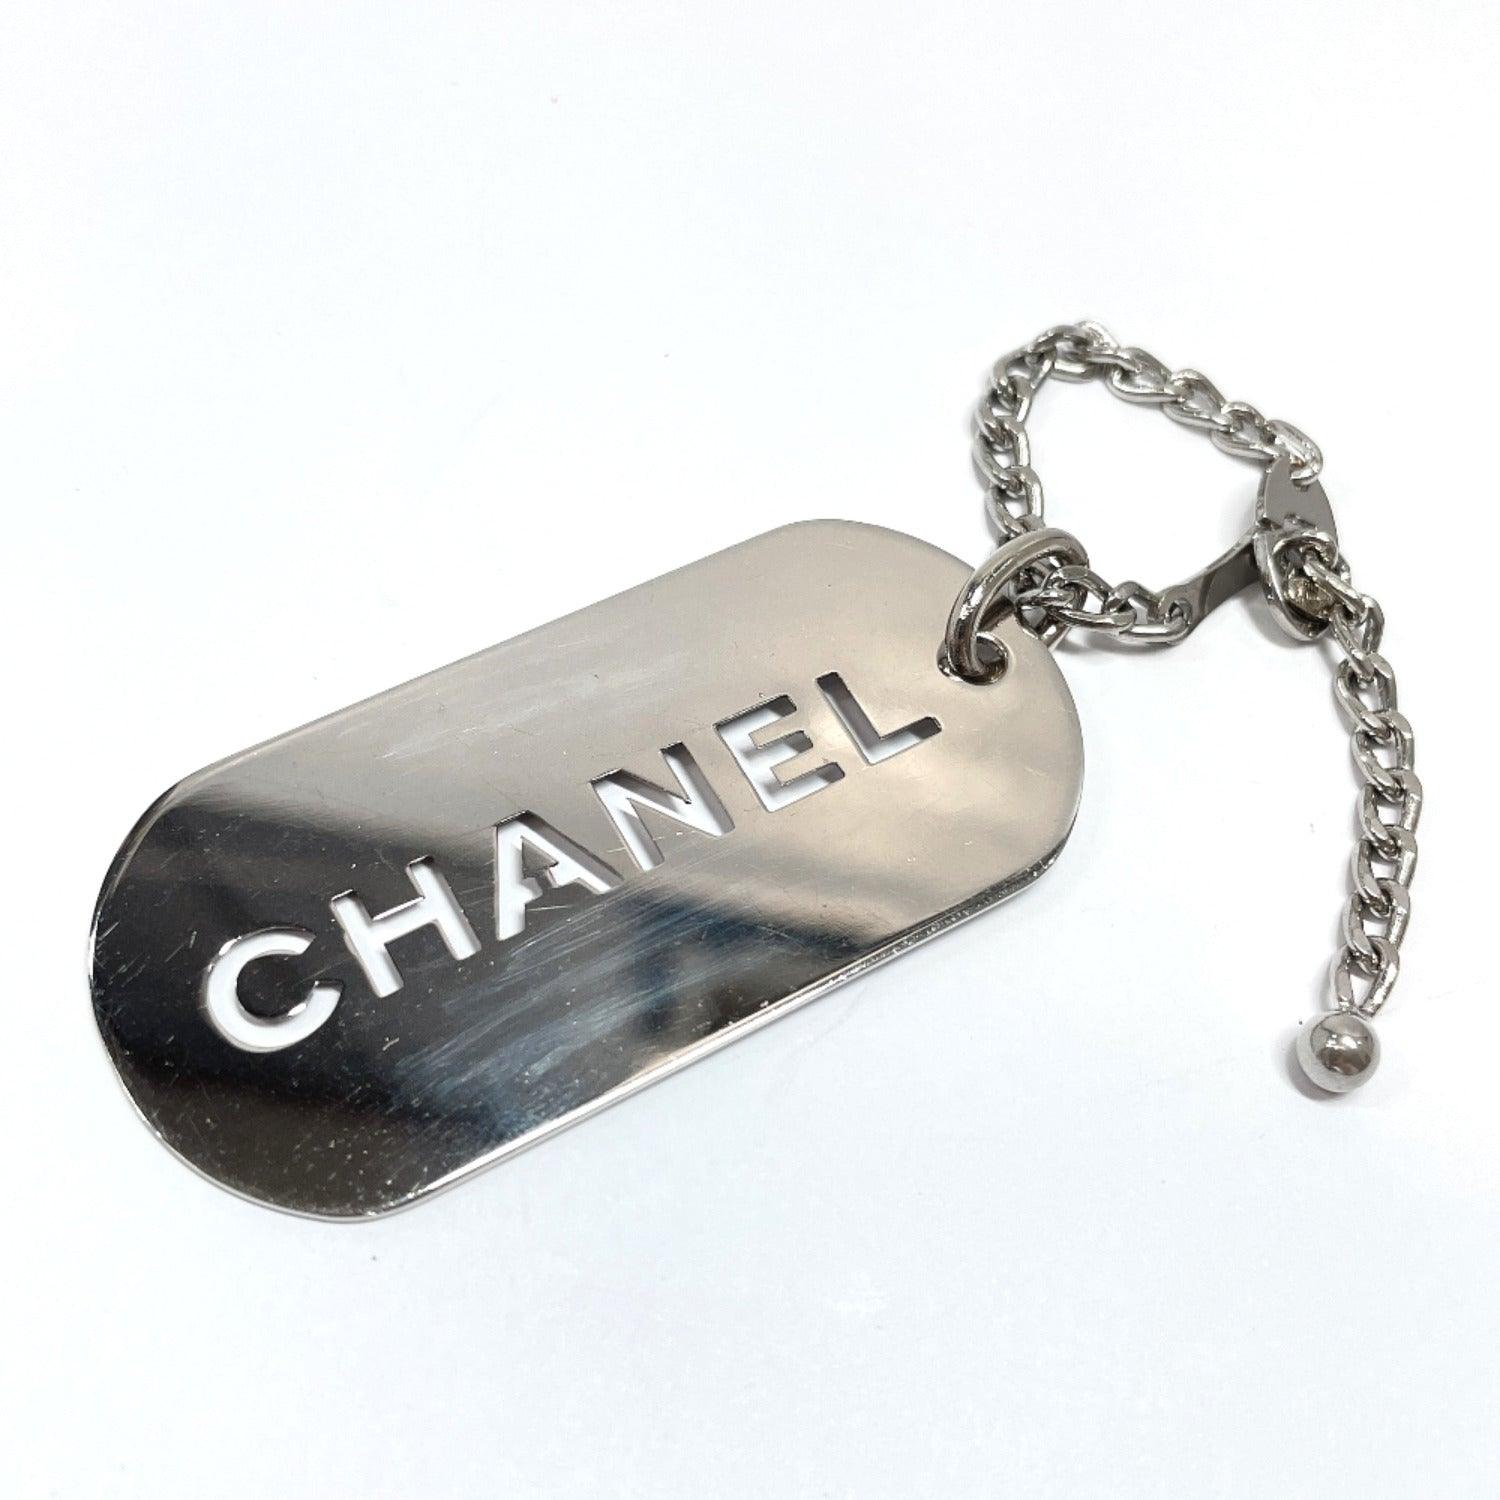 Cc silver bag charm Chanel Silver in Silver - 25060969